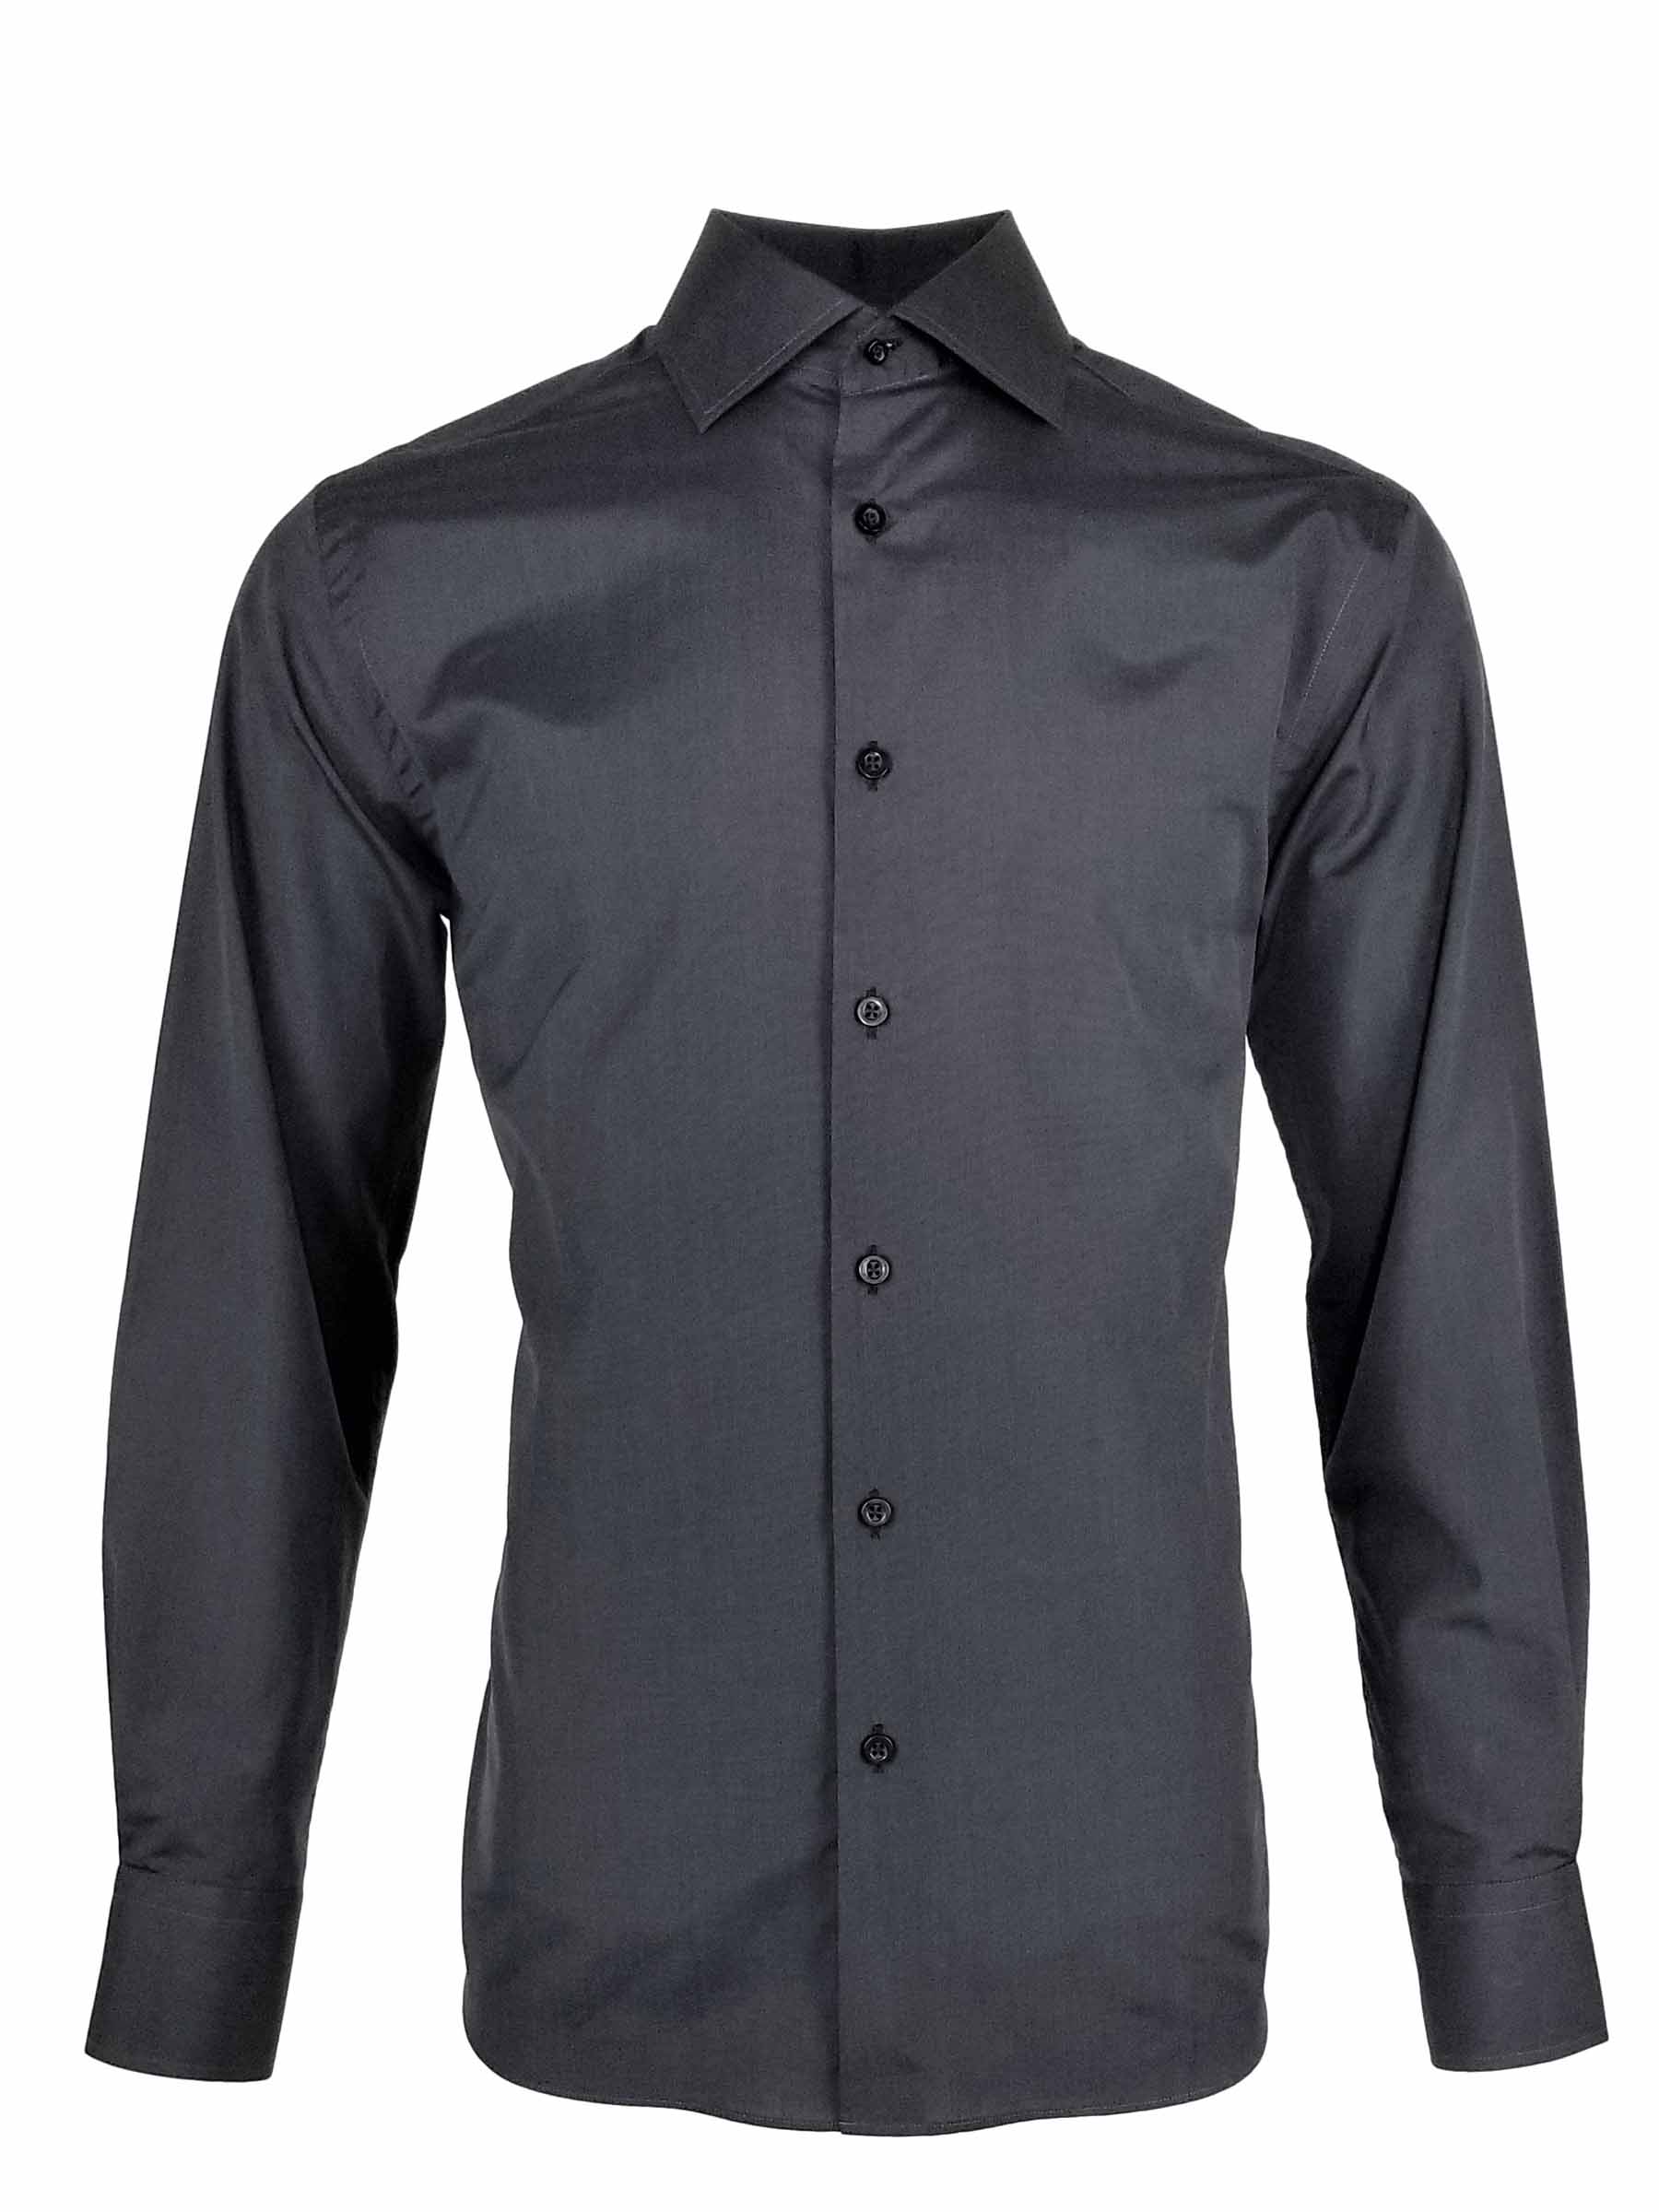 Men's Elegant Shirt - Charcoal Long Sleeve - Uniform Edit